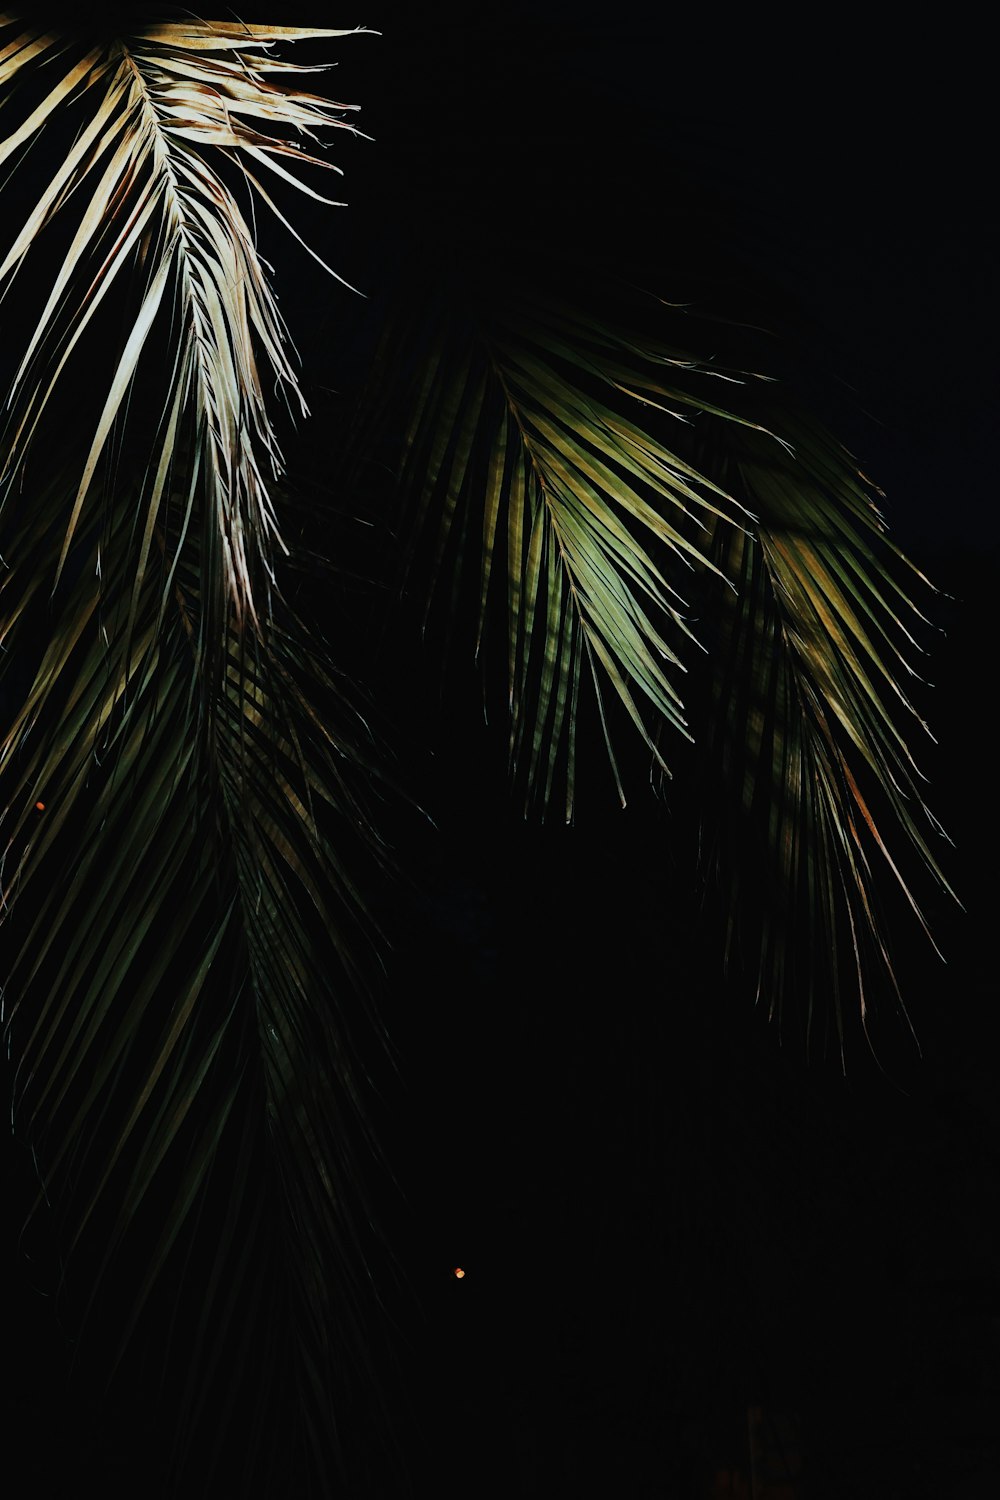 palmier vert